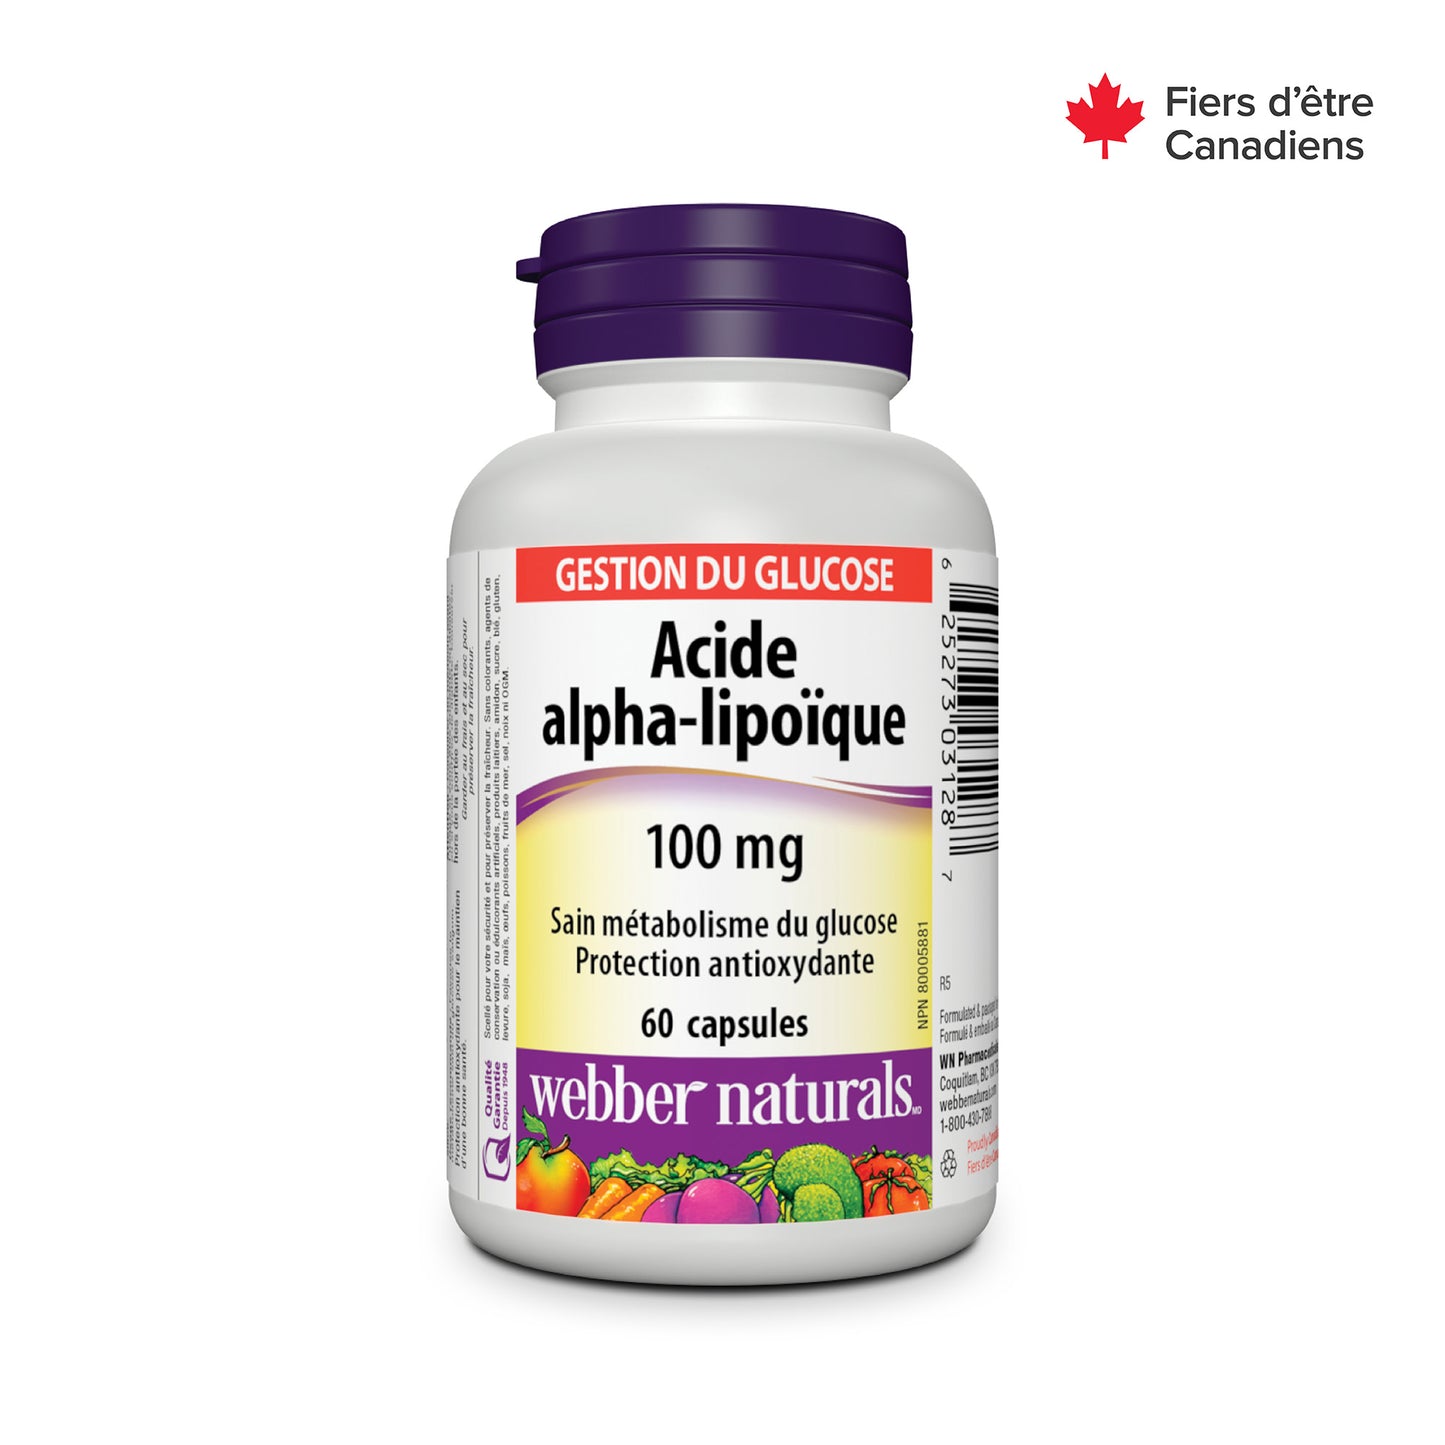 Acide alpha-lipoïque 100 mg for Webber Naturals|v|hi-res|WN3128